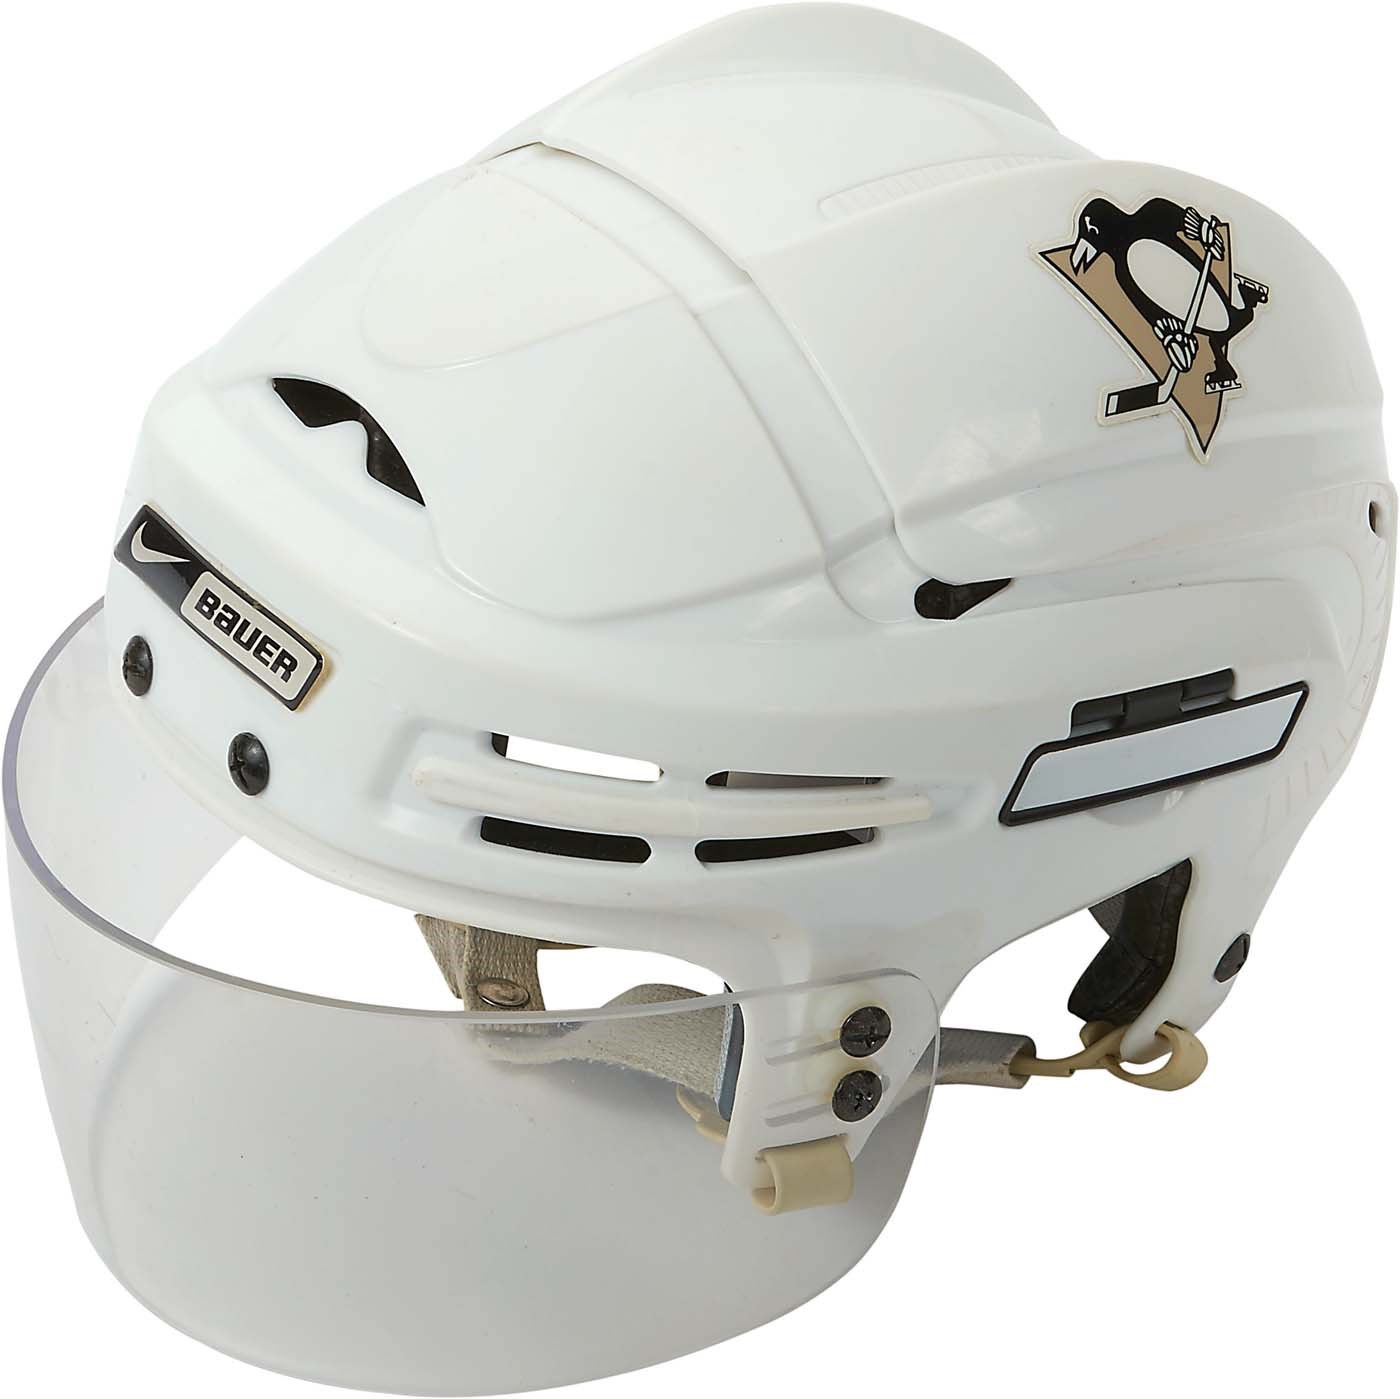 - 2009 Sergei Gonchar Game Worn Stanley Cup Finals Penguins Helmet (Photo-Matched)